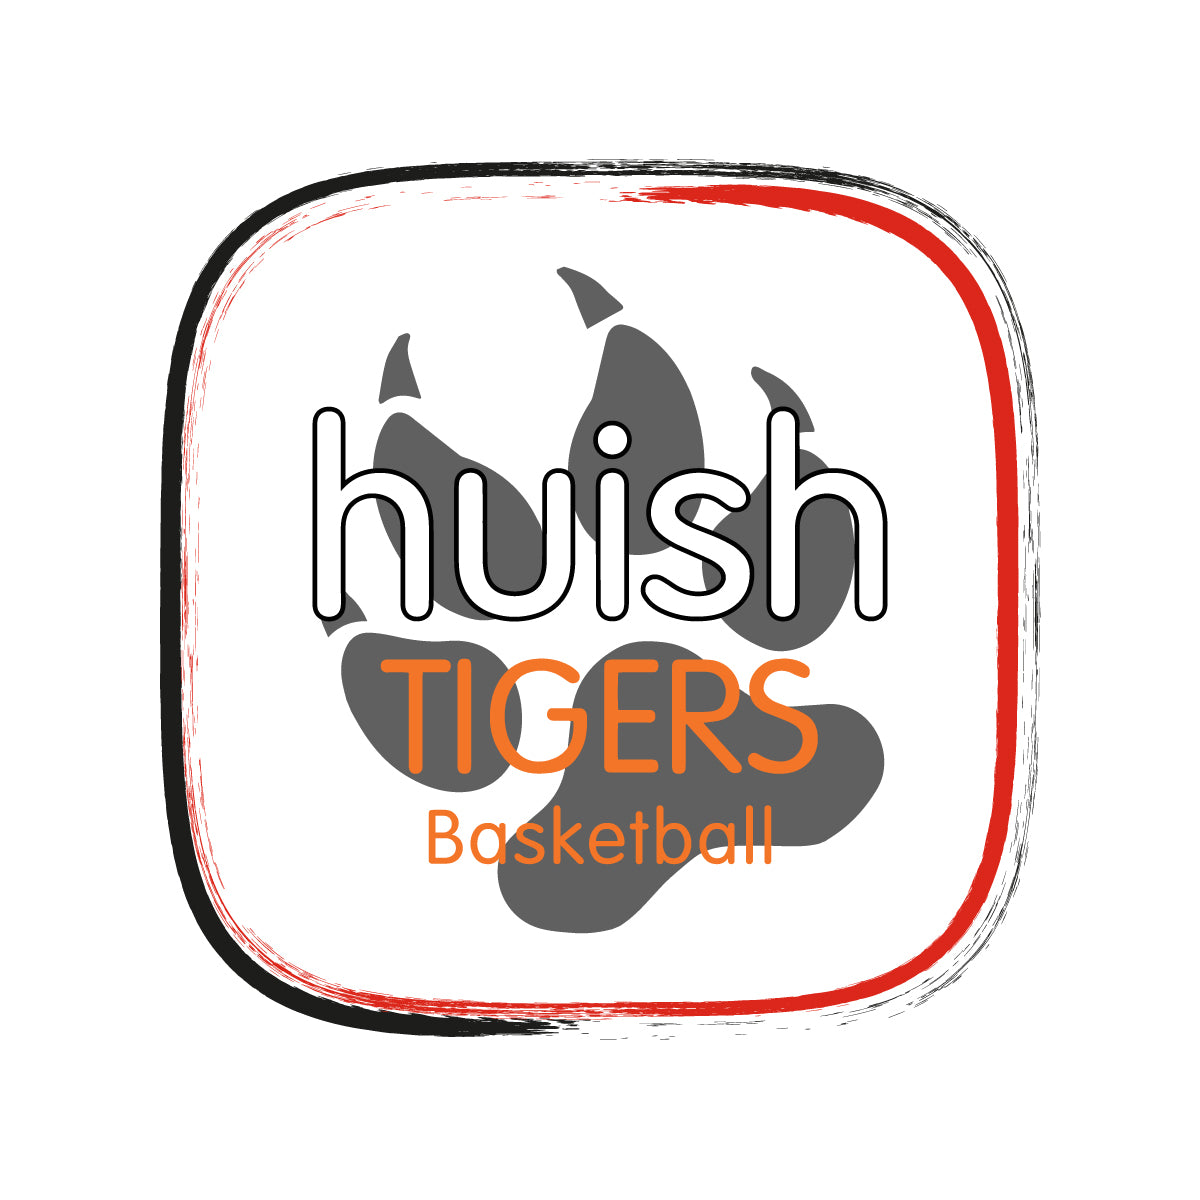 Huish Tigers Basketball